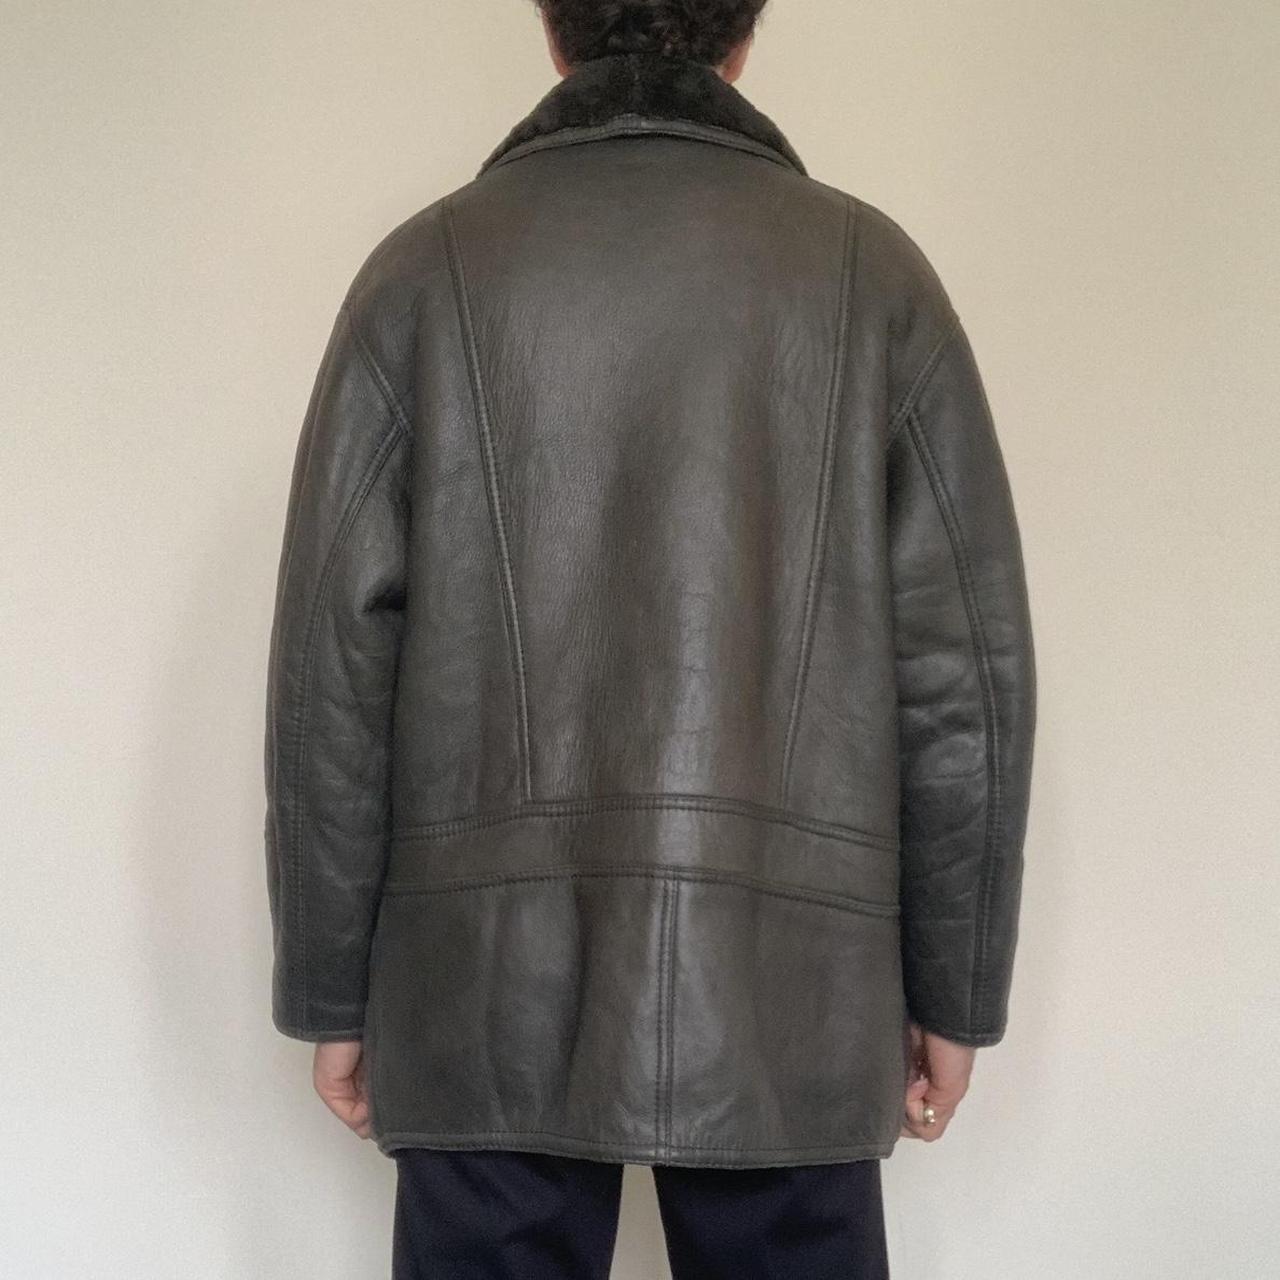 Quality Leather Sheepskin coat, fully shearling... - Depop